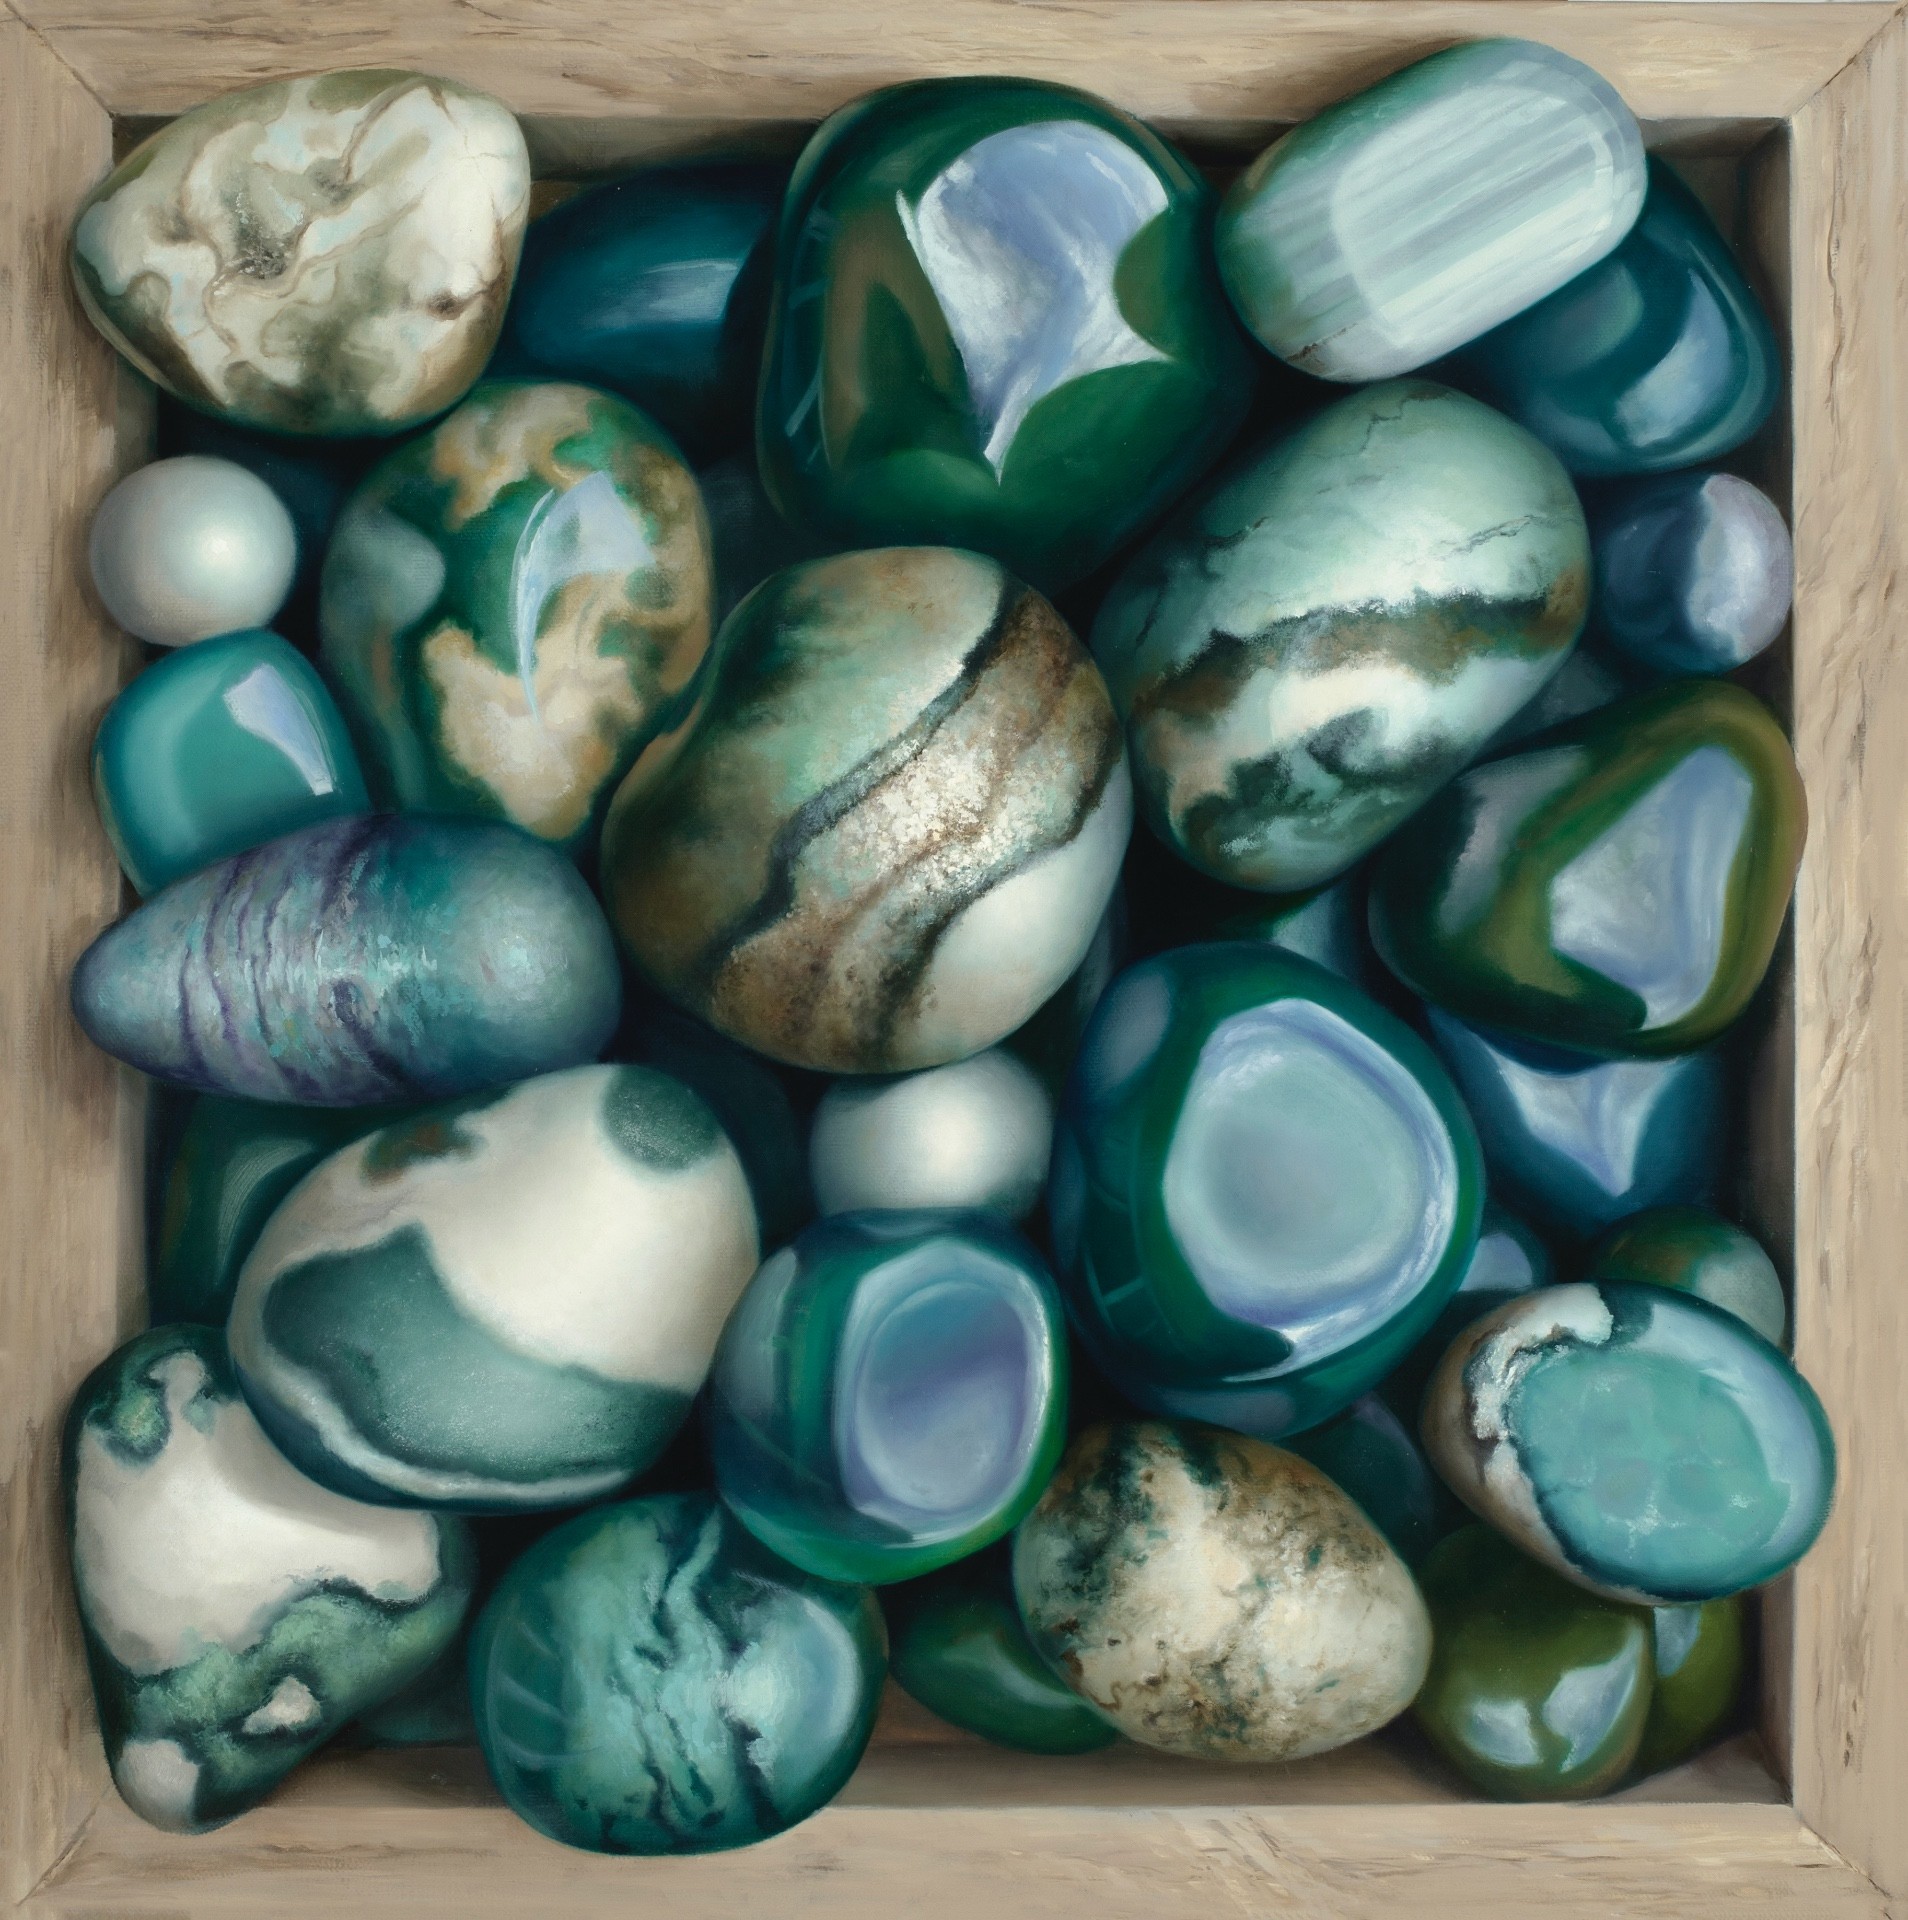 PleinAir Magazine's 13th Annual PleinAir Salon Art Competition July Top 100 Lara Restelli Rocks in a Box "Green" Still Life